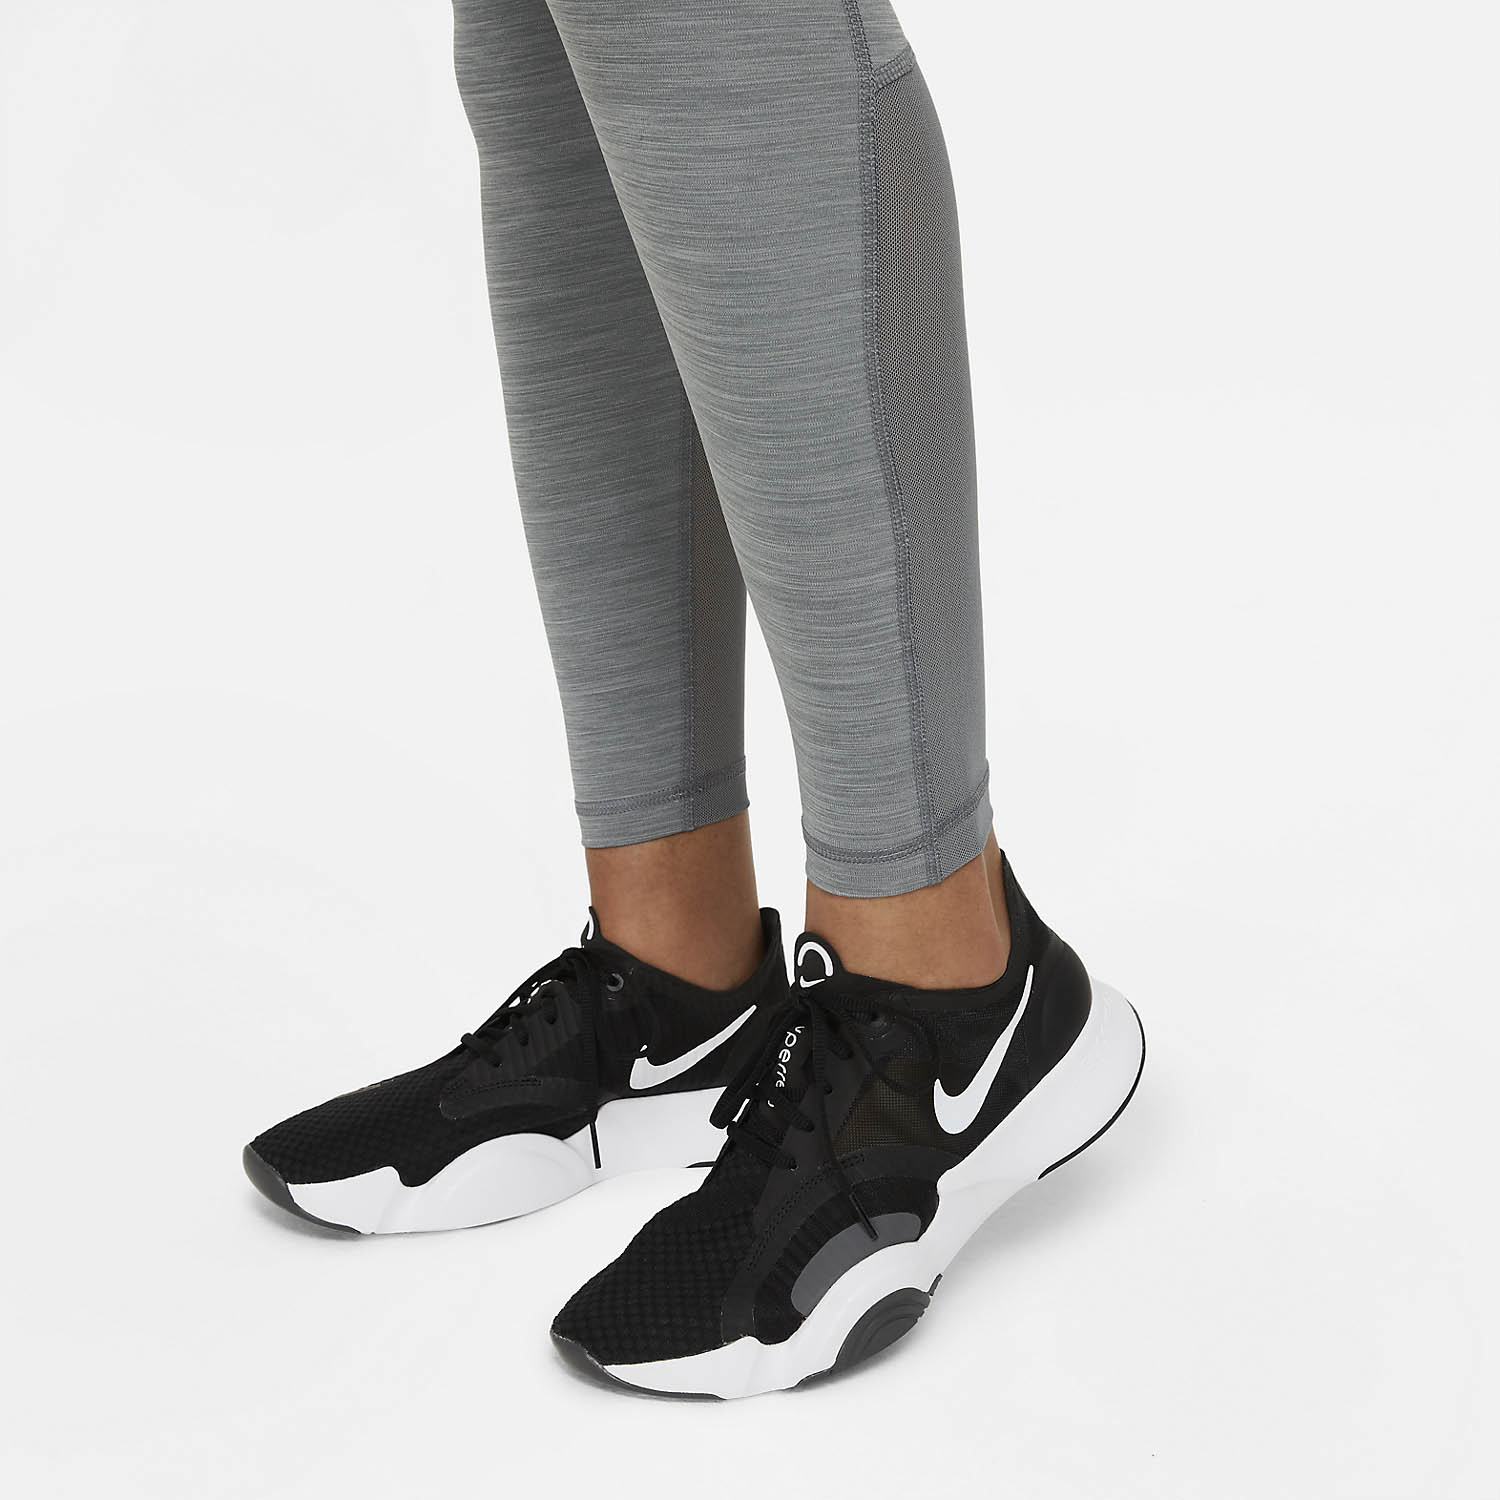 Nike Pro 365 Tights - Smoke Grey Heather/Black/White